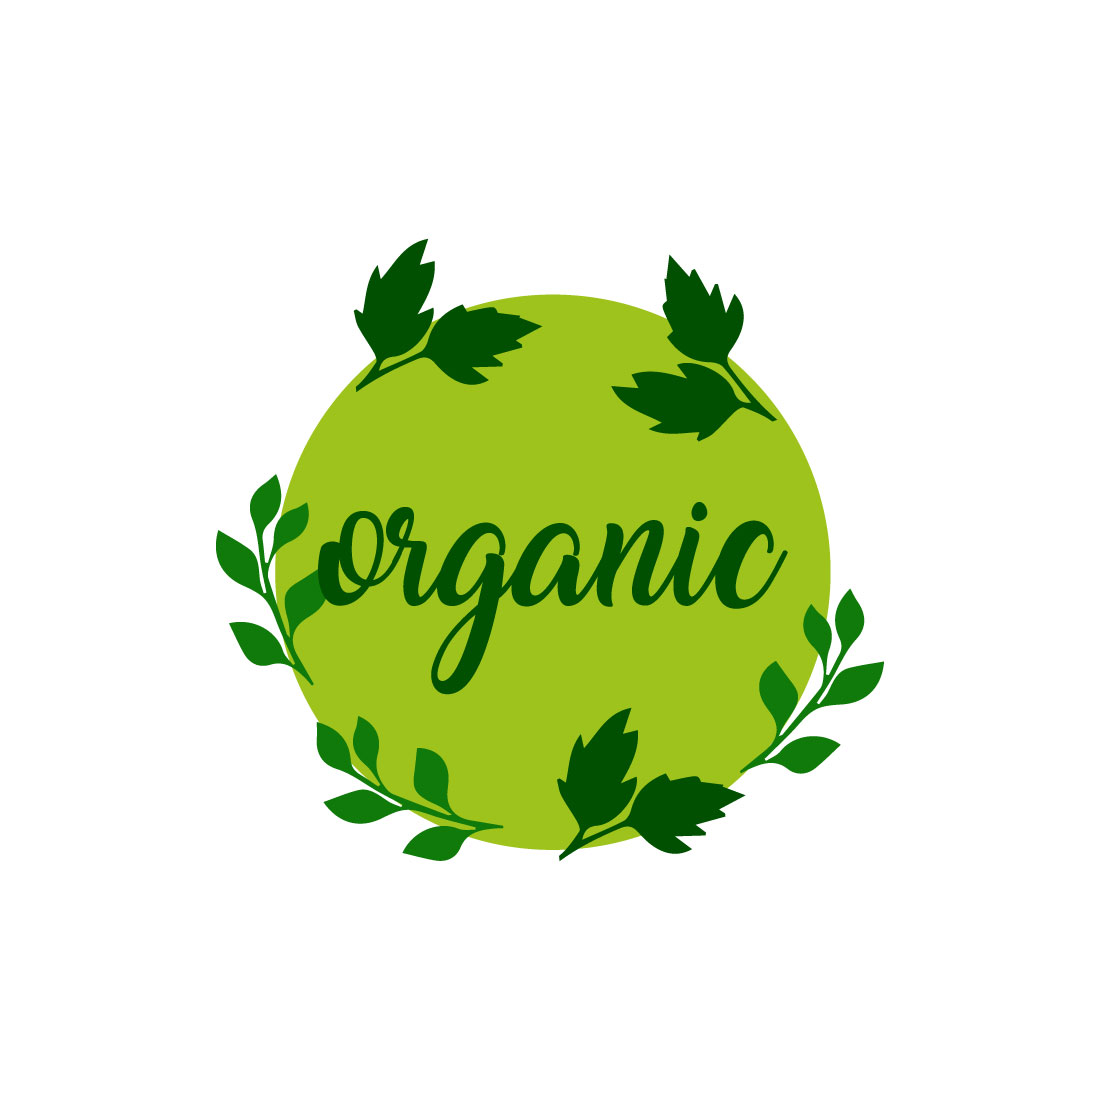 Free Chemical-free organic logo cover image.